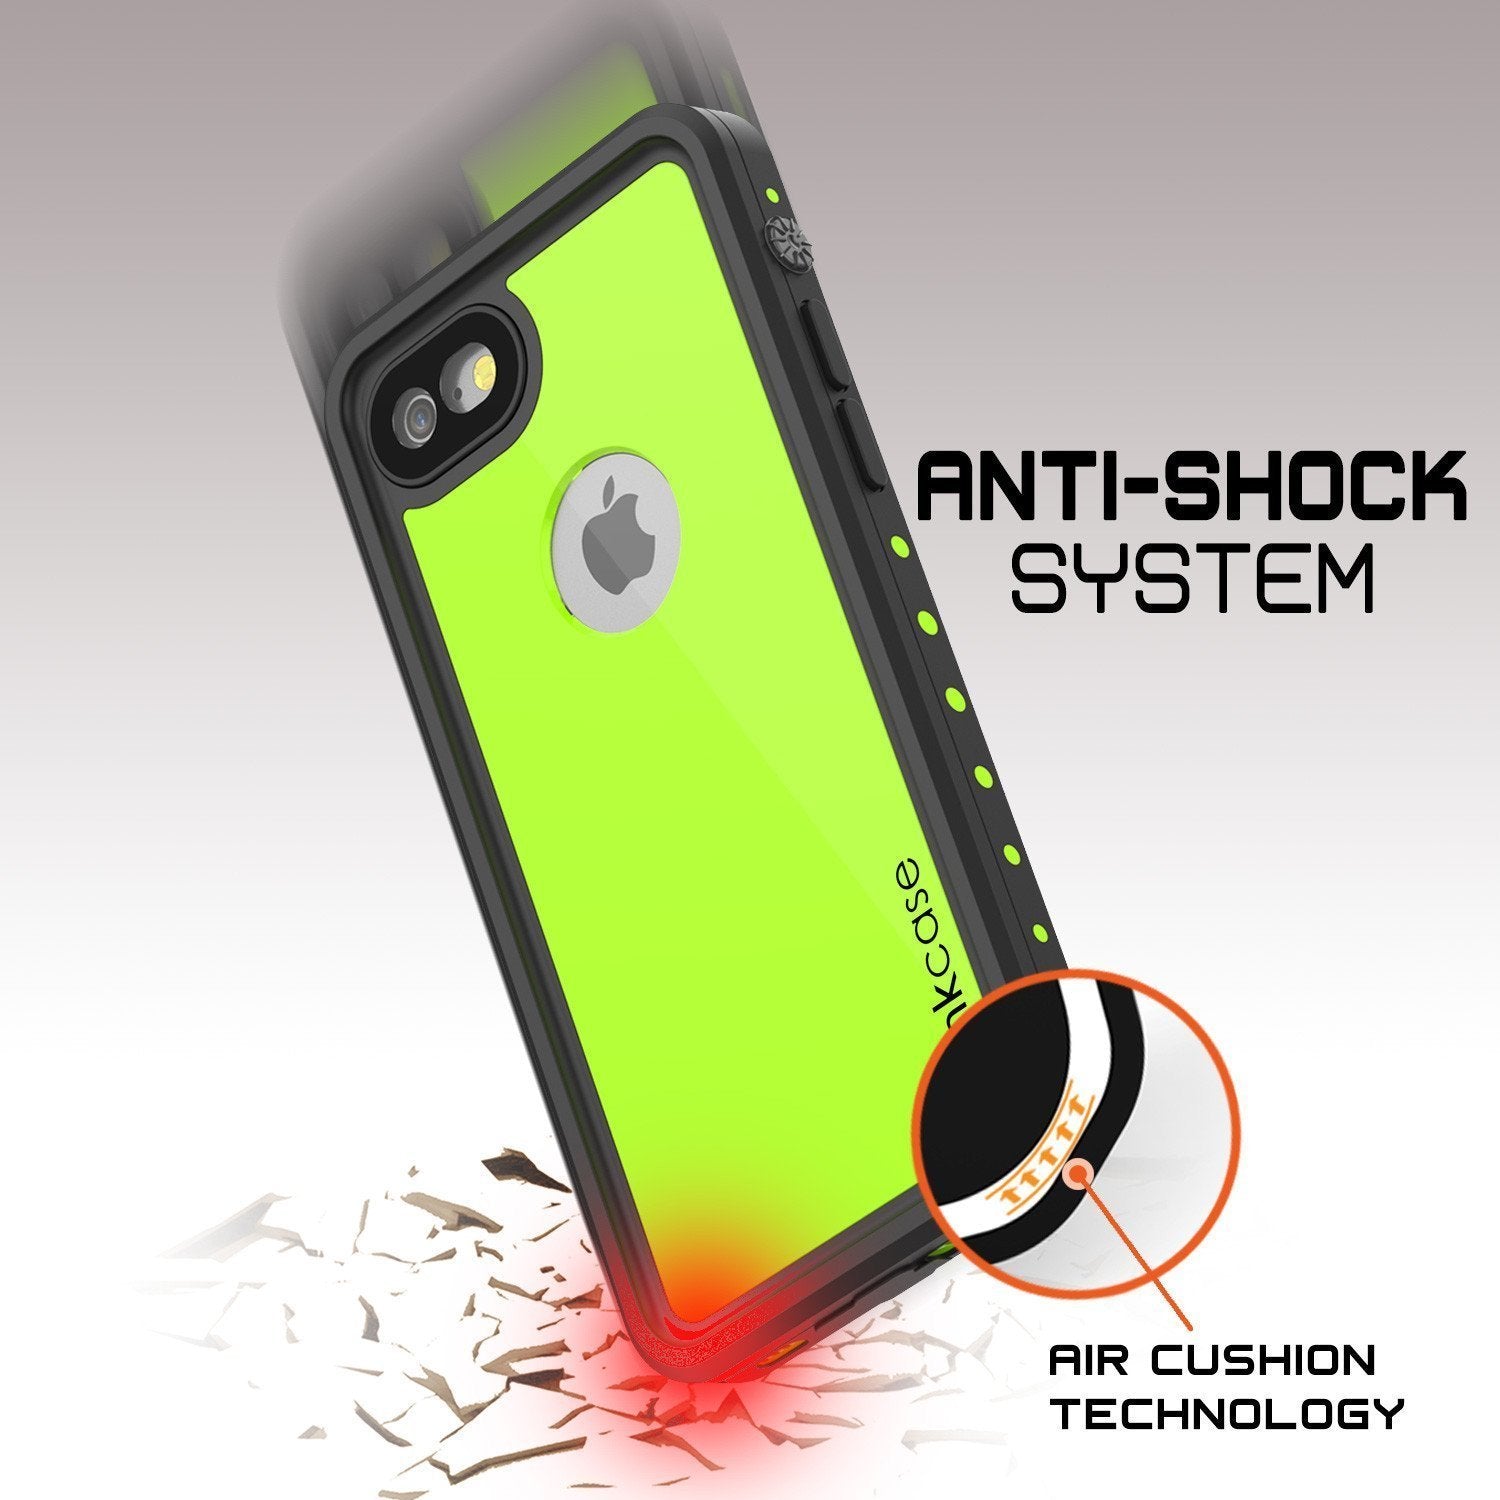 iPhone 8 Waterproof Case, Punkcase [Light Green] [StudStar Series] [Slim Fit][IP68 Certified]  [Dirt/Snow Proof]